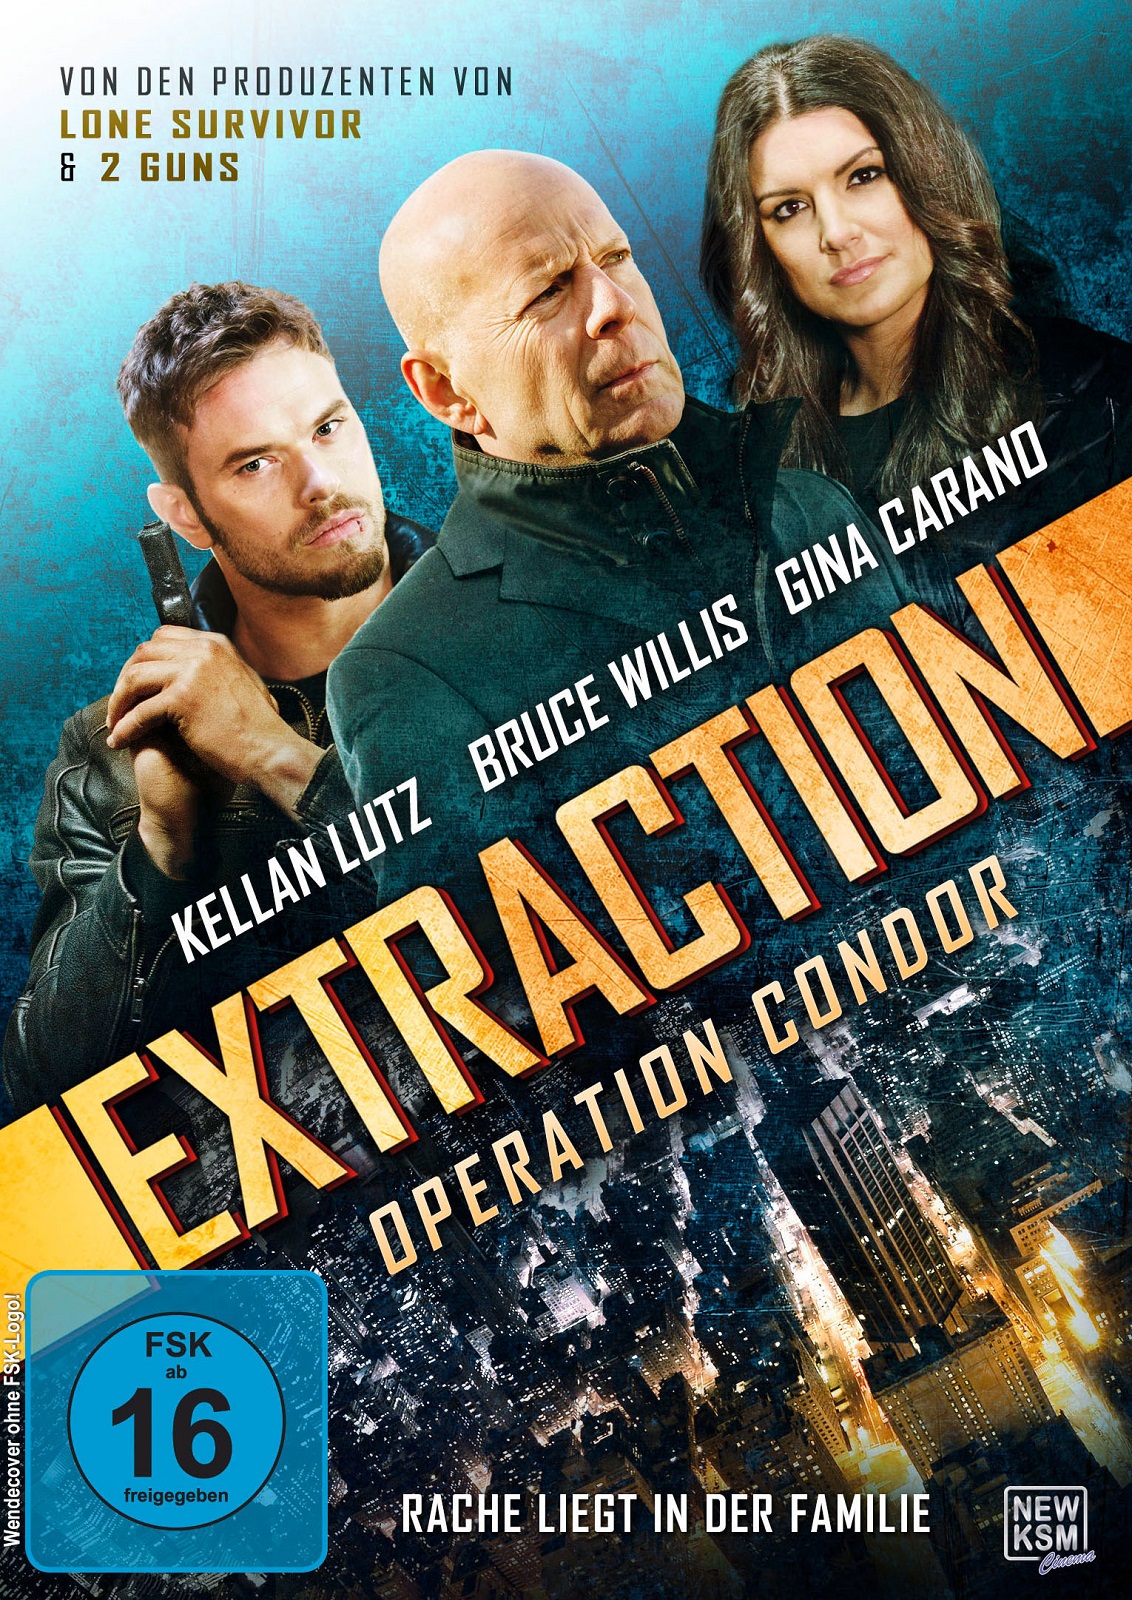 Extraction Operation Condor Film 2015 FILMSTARTS.de